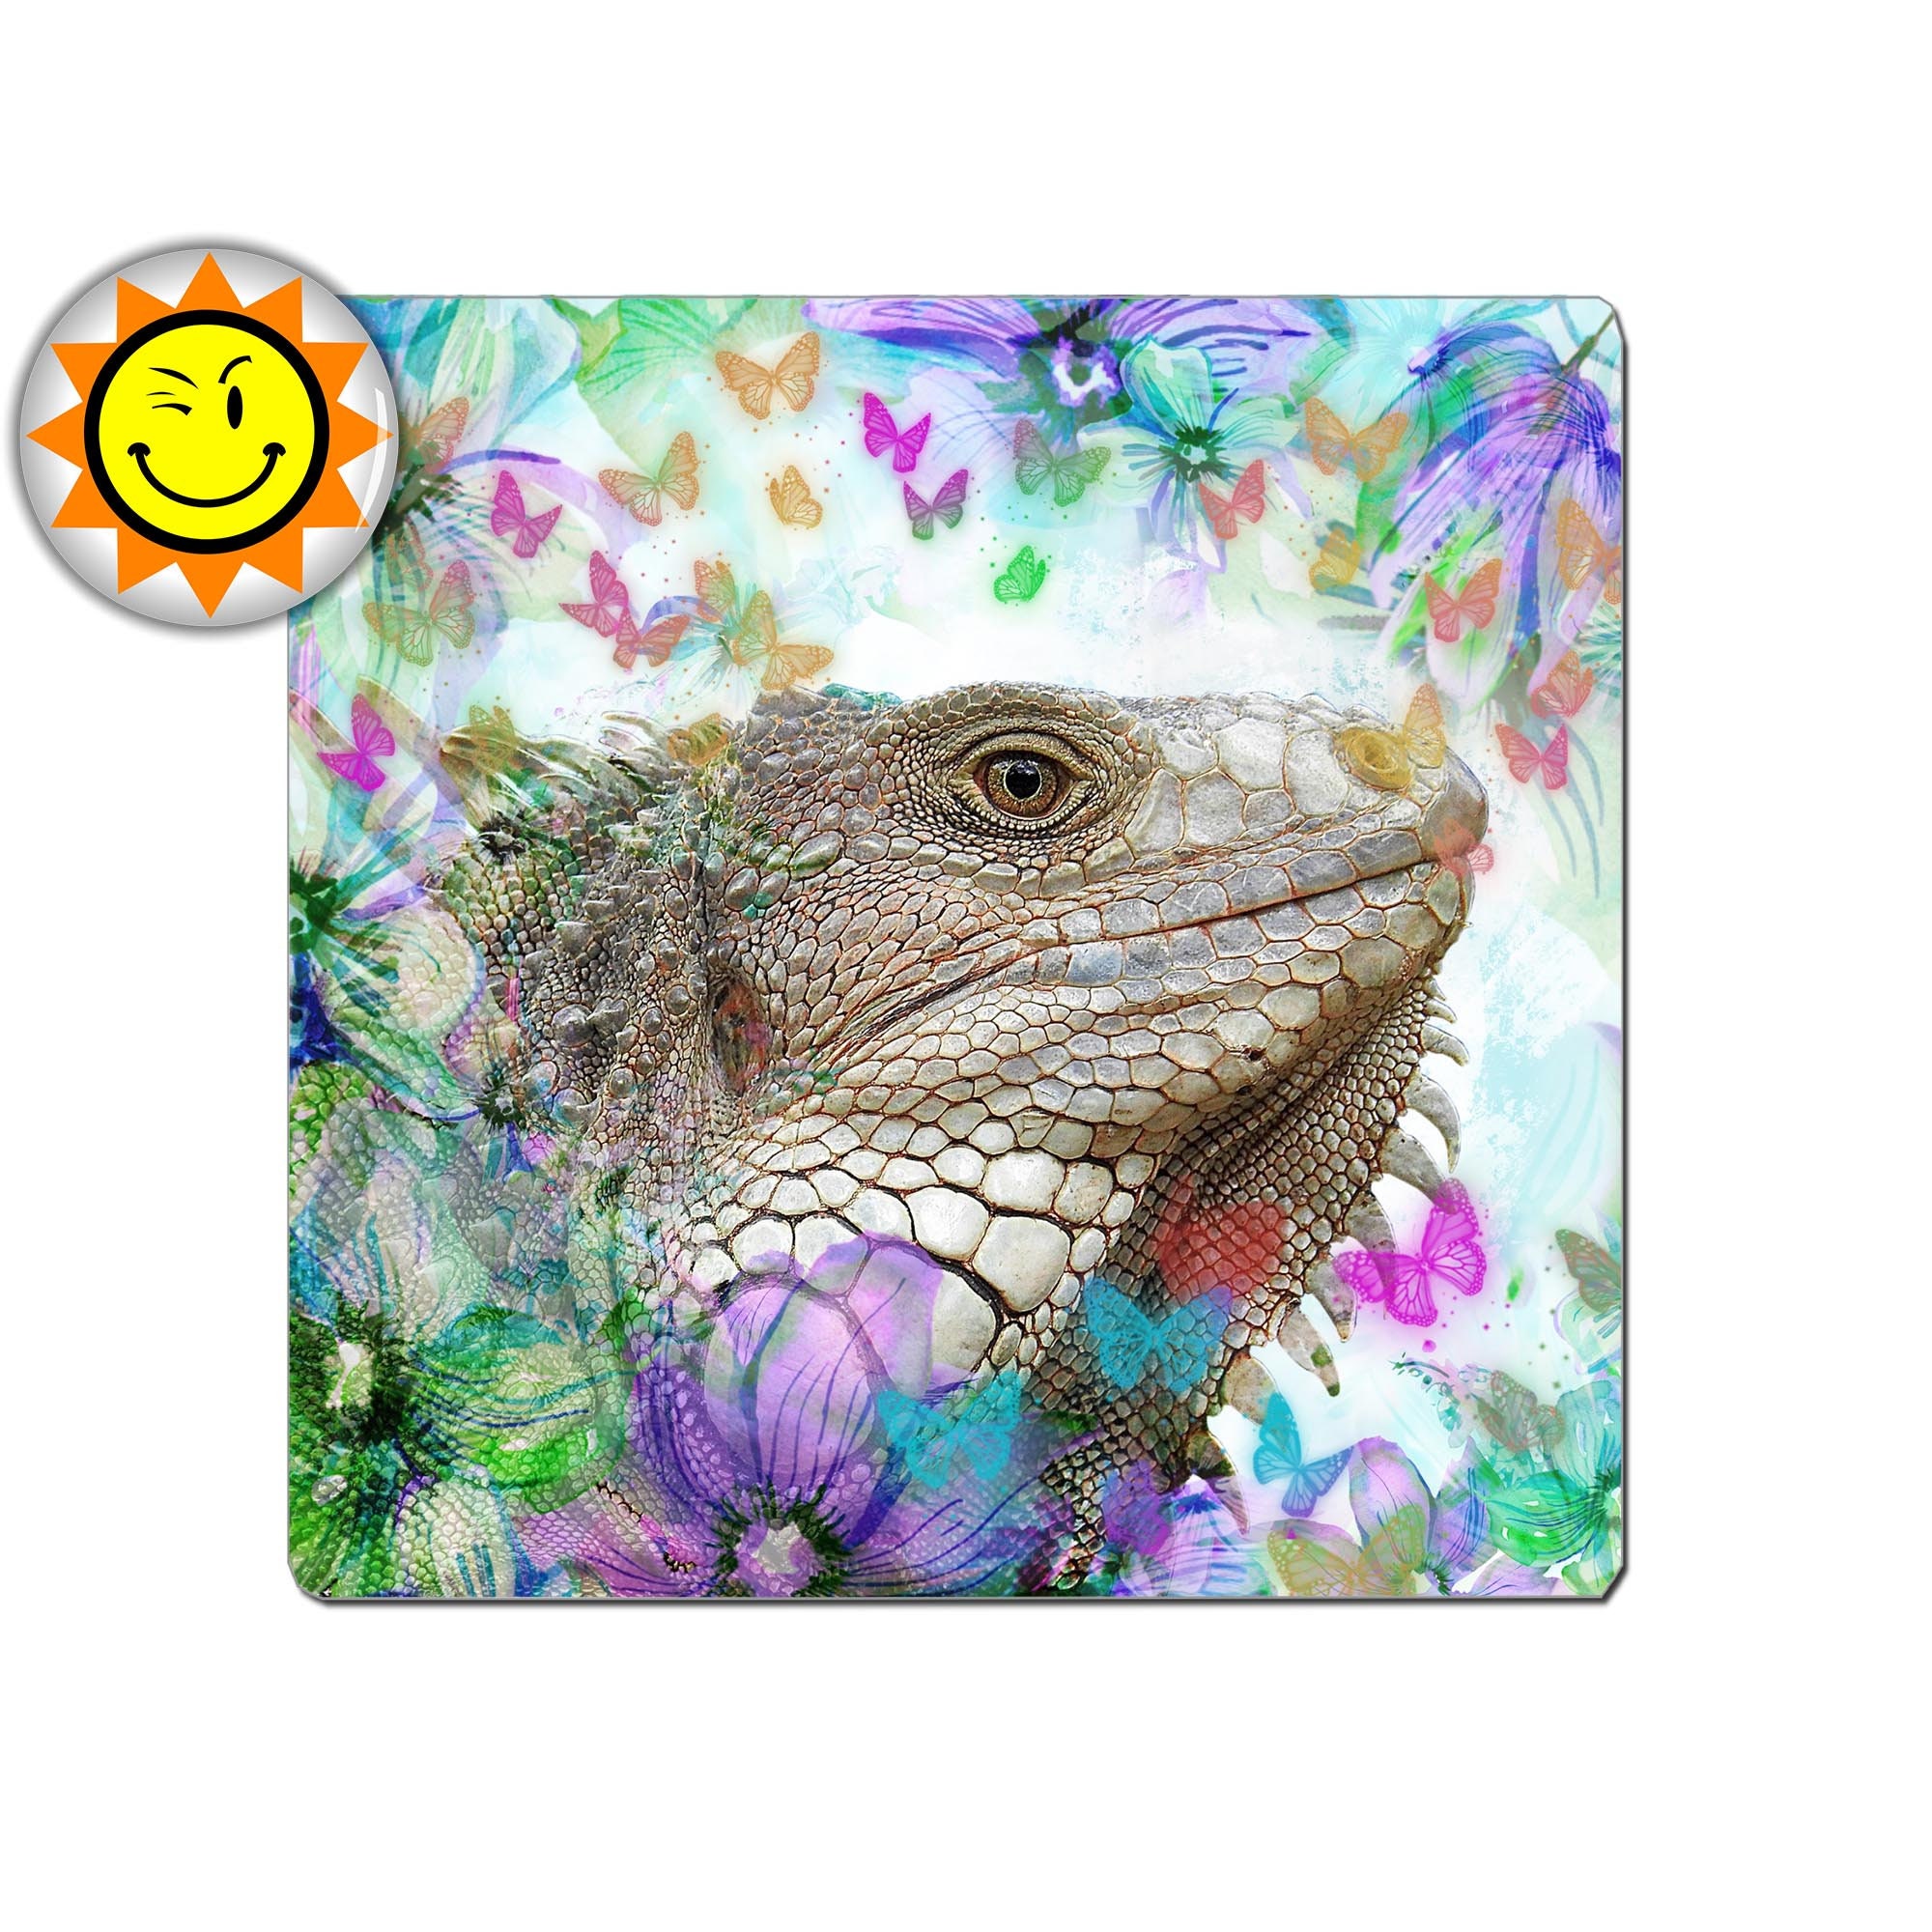 Plaque Decorative Metal Vintage Shabby Animal Gecko Lezard Cameleon Idee Cadeau Aluminium ...dimensi